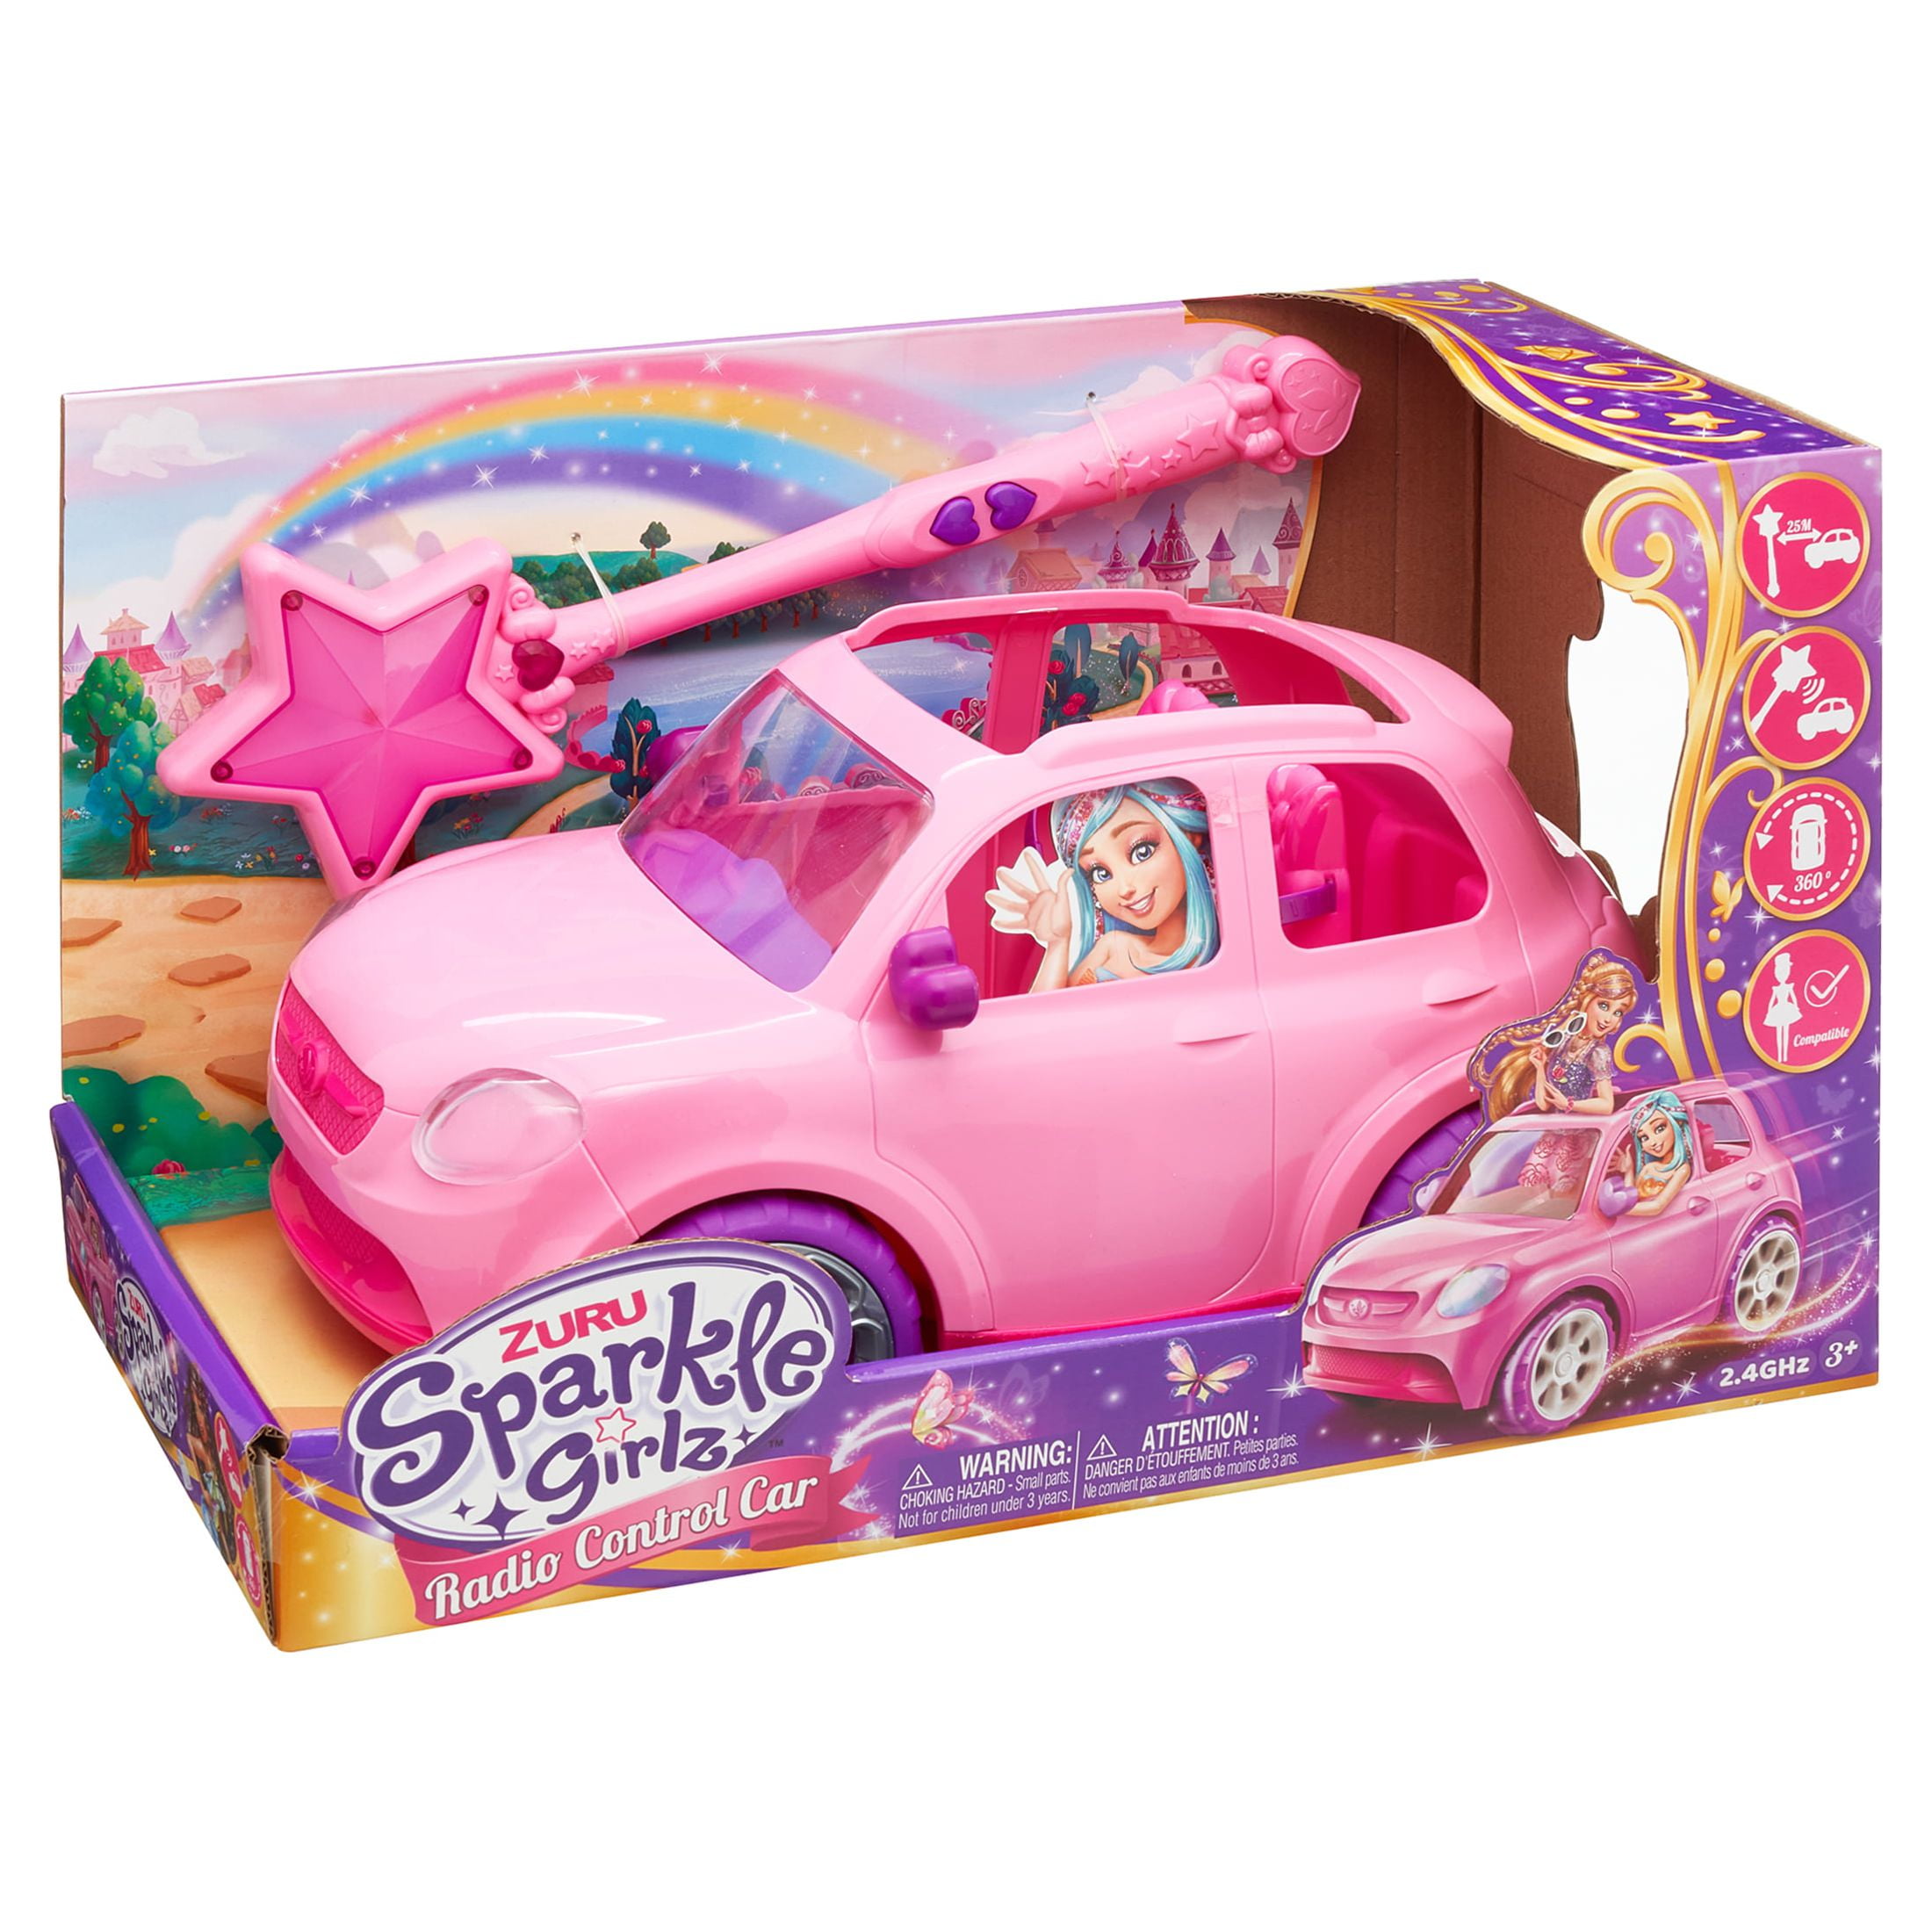 Sparkle Girlz Dolls Radio Control Car by ZURU for Children Ages 3 Plus